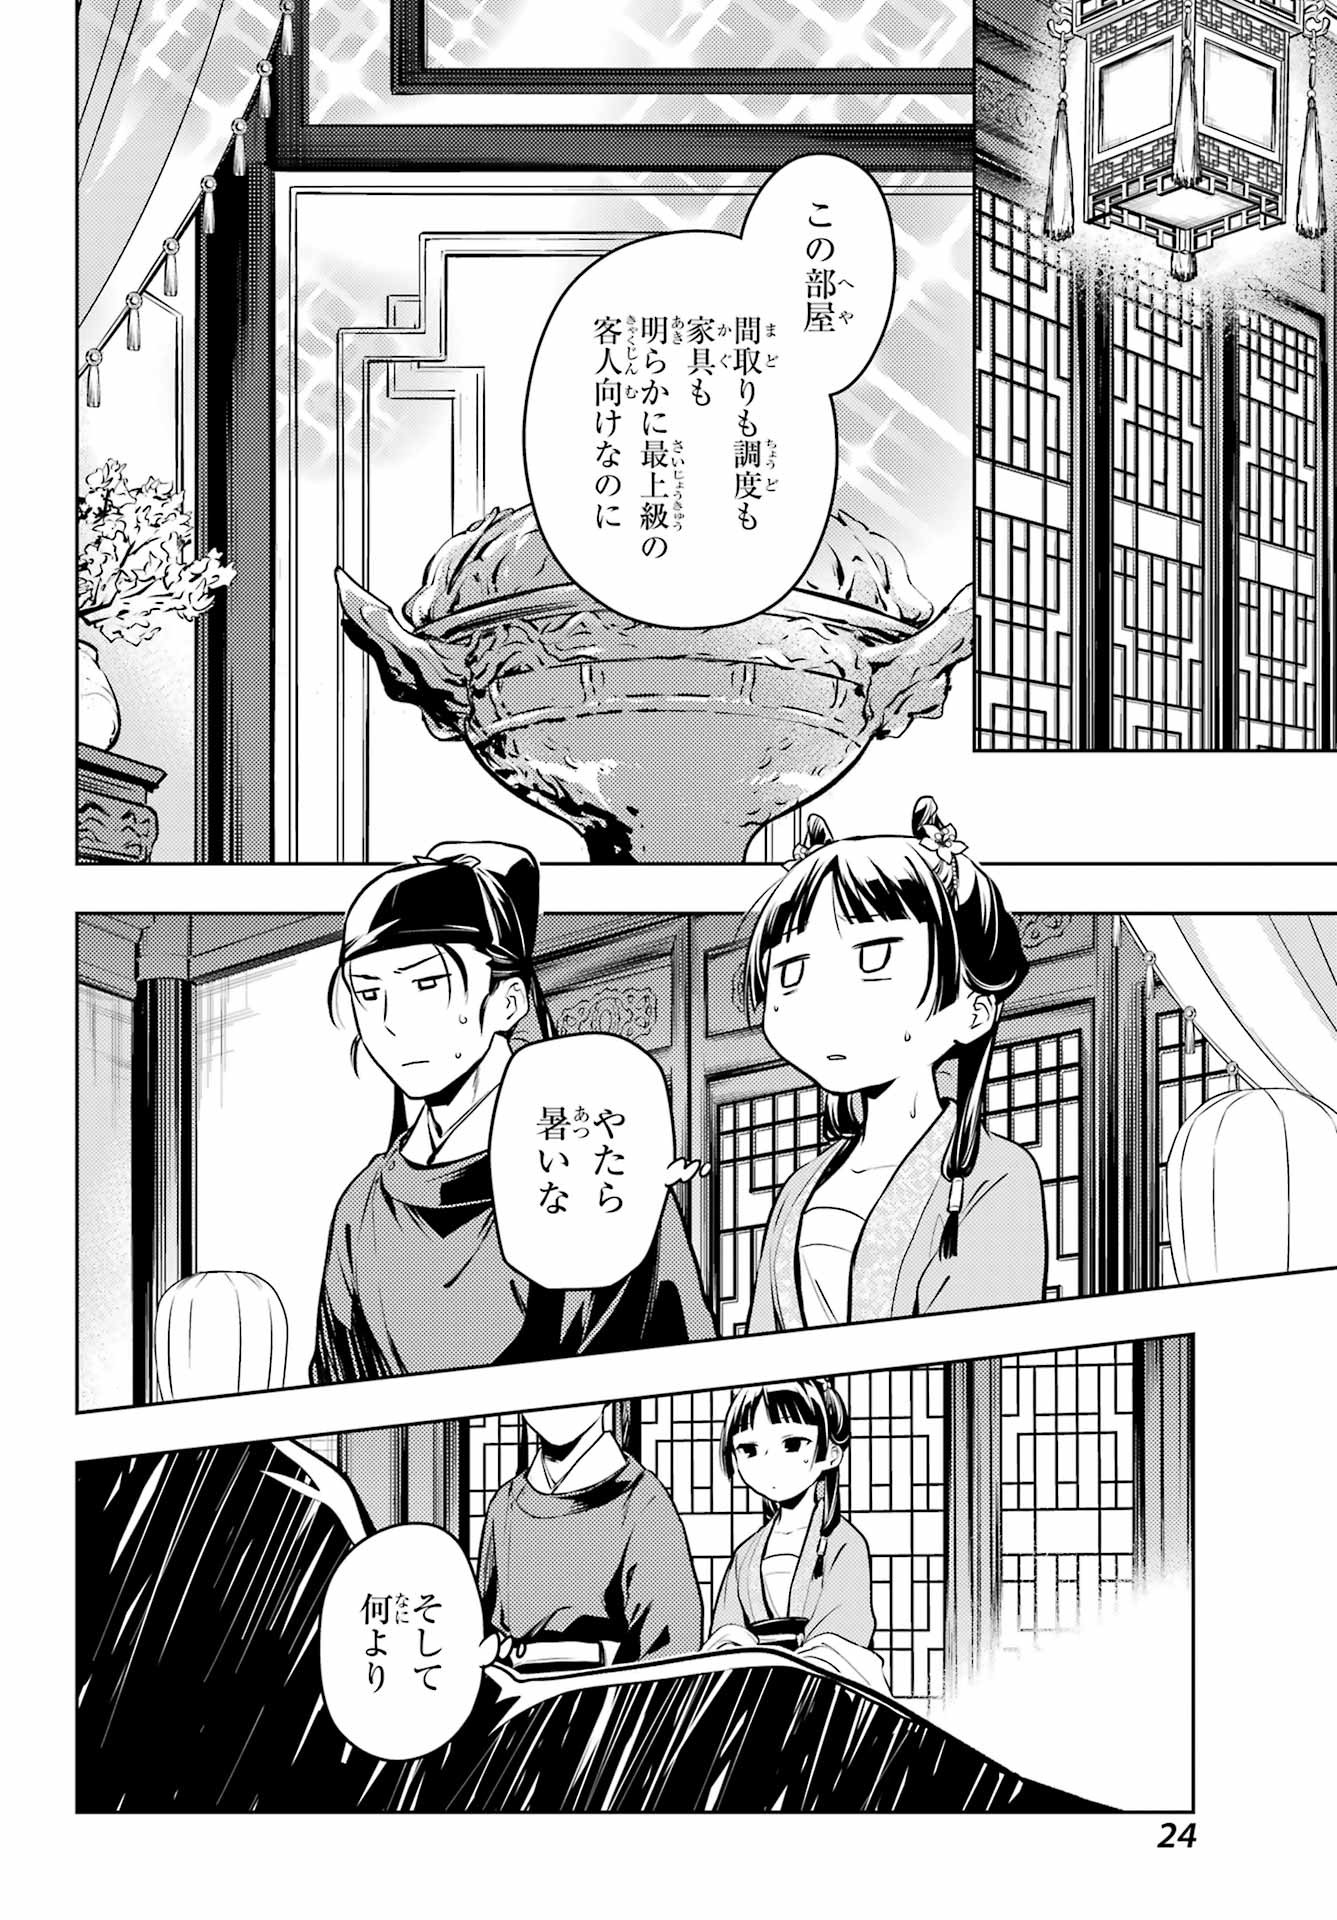 Kusuriya no Hitorigoto - Chapter 60-1 - Page 18